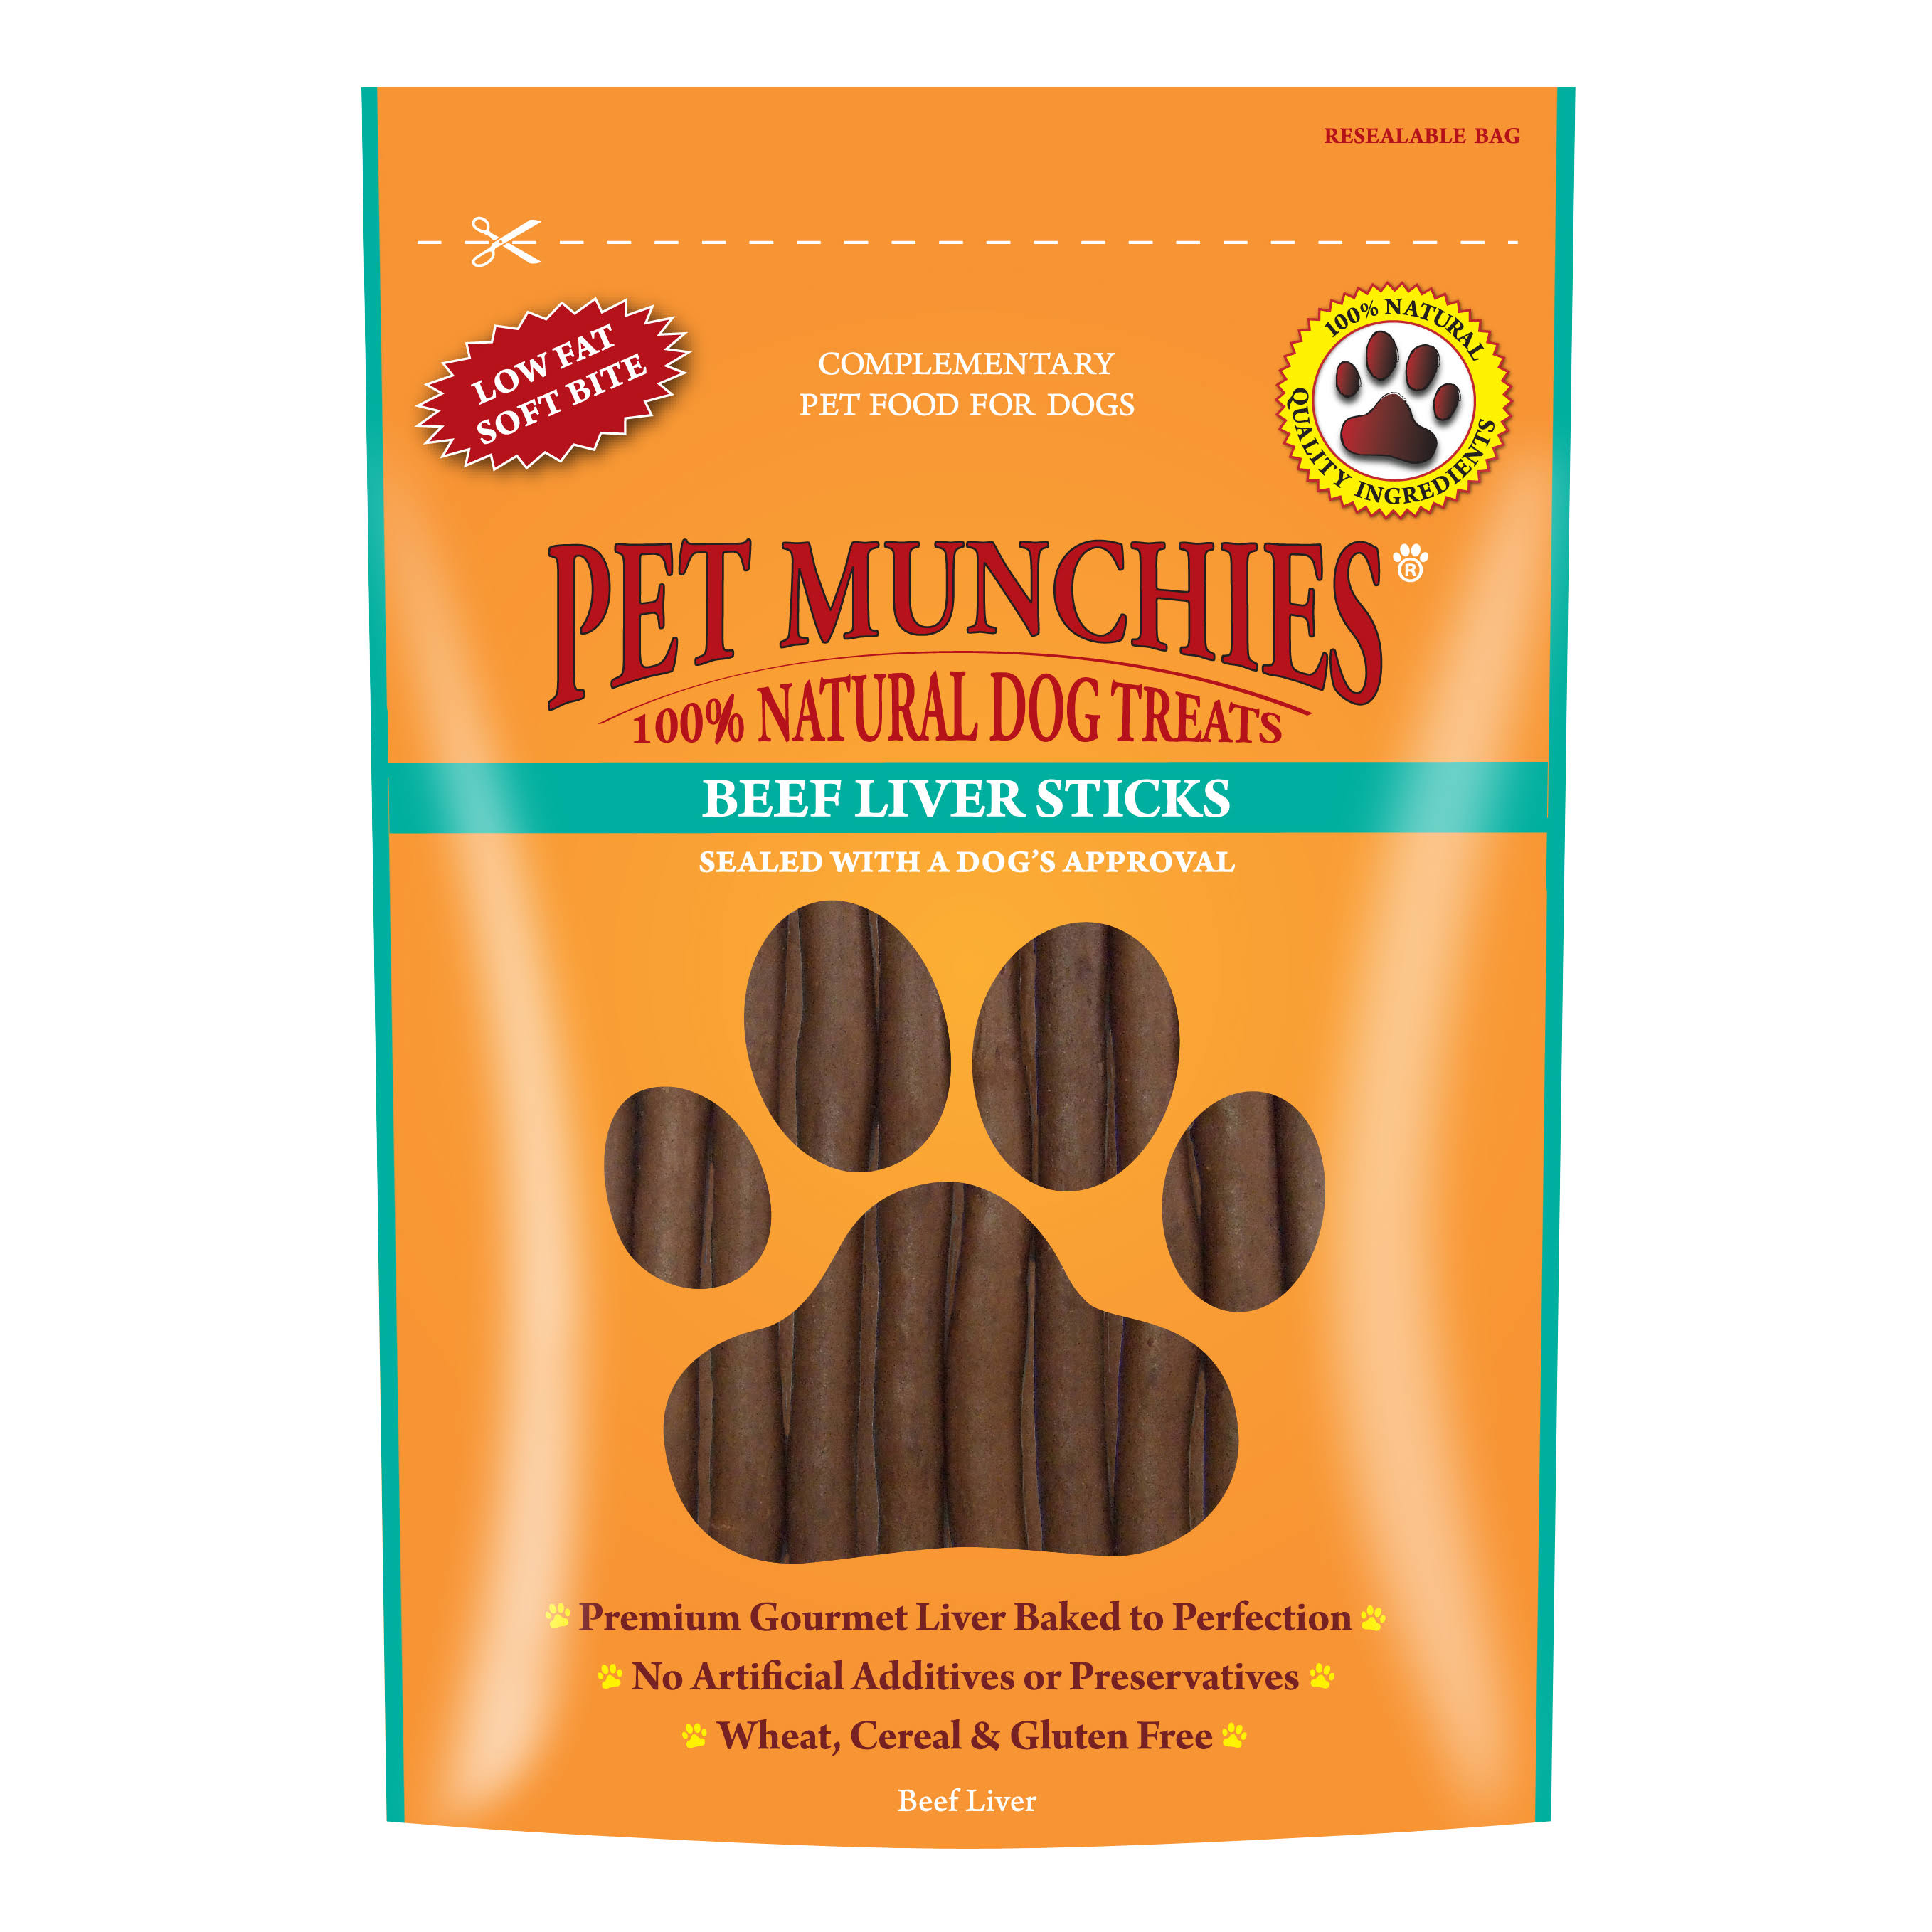 Pet Munchies 100% Natural Dog Treats - Beef Liver, 8 sticks 